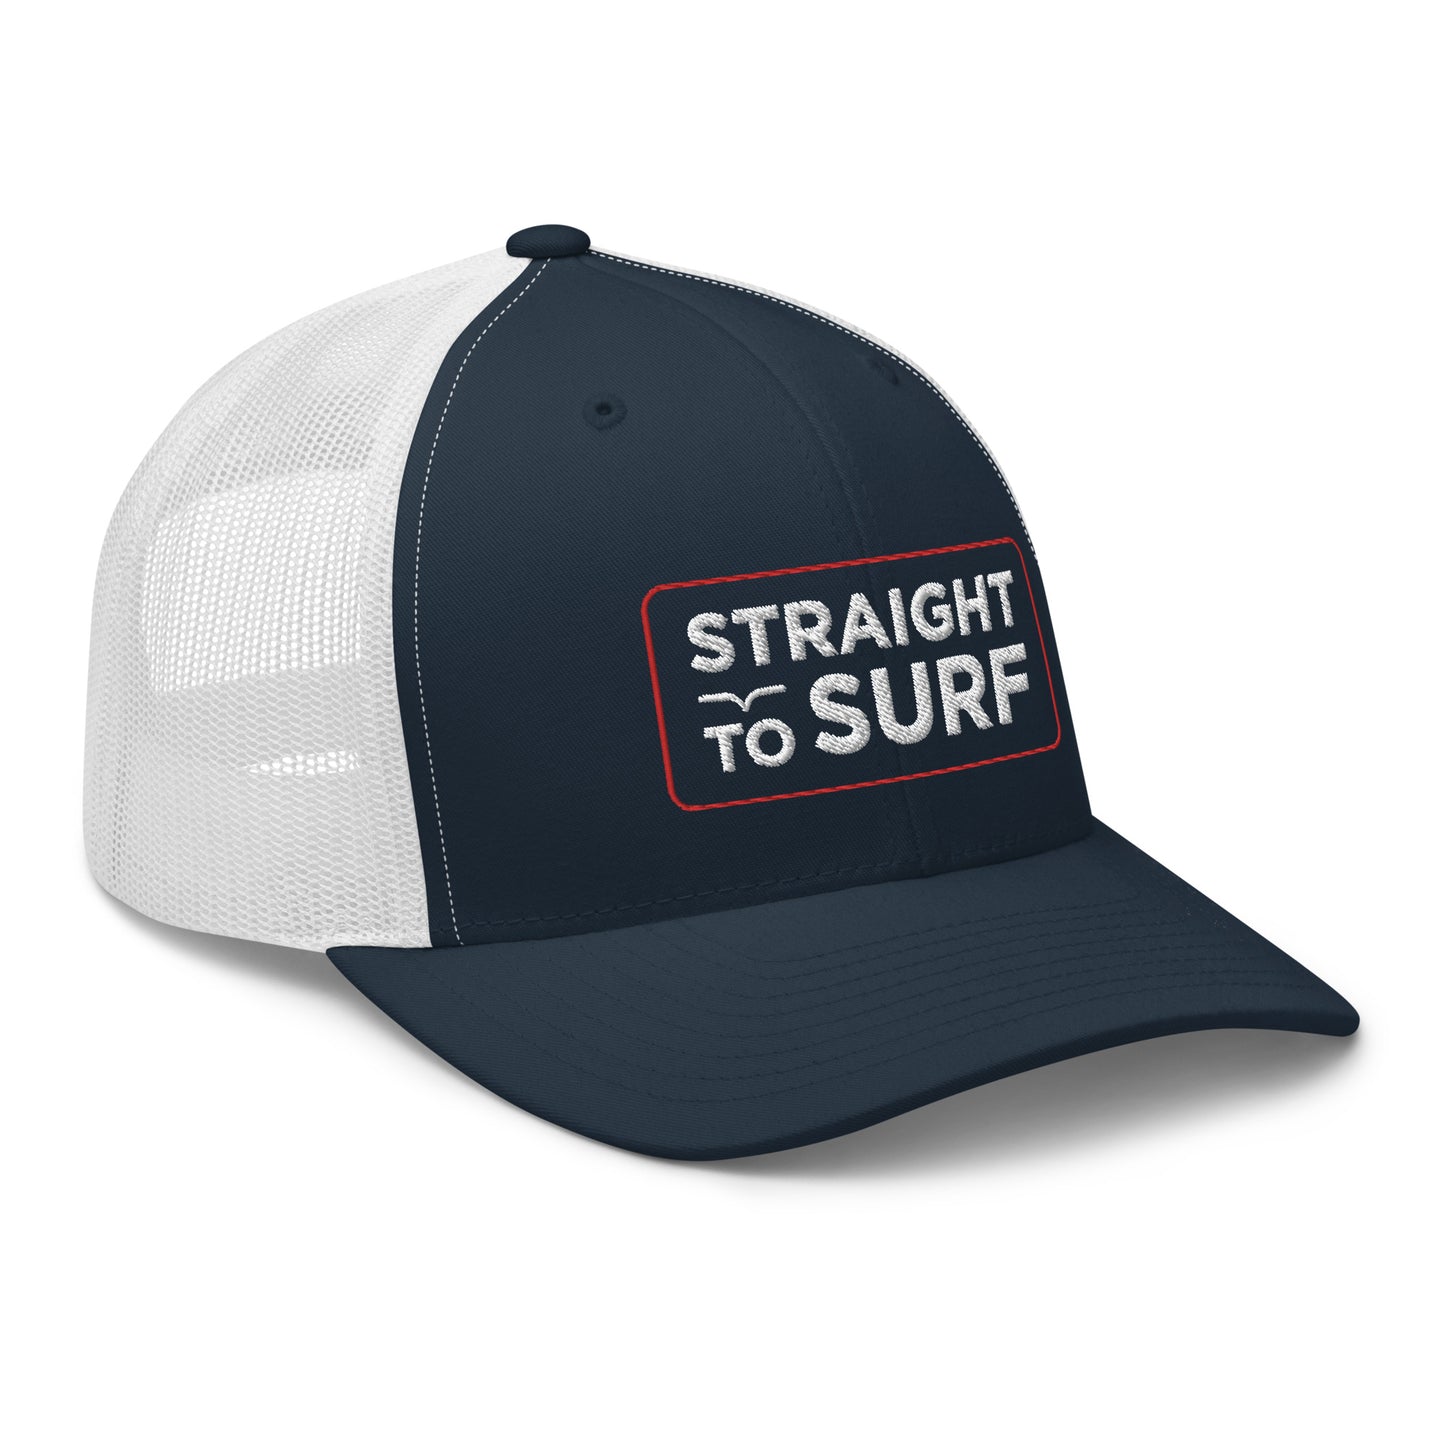 Straight to Surf - Navy Trucker Cap